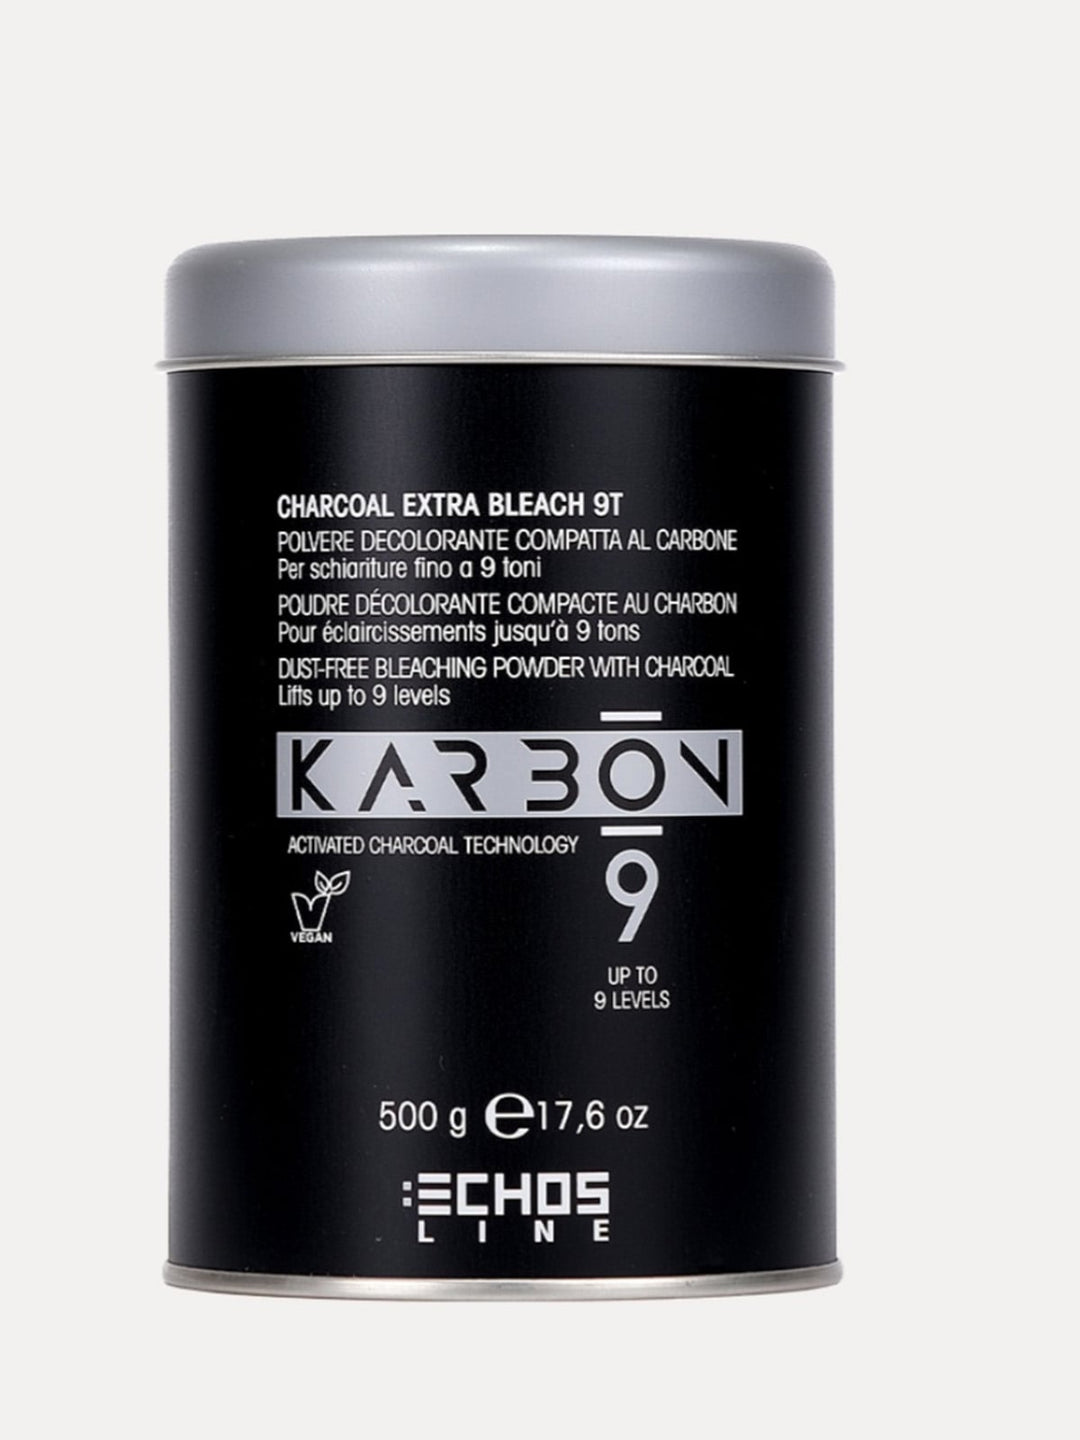 Charcoal Extra Bleach 9T | Echosline